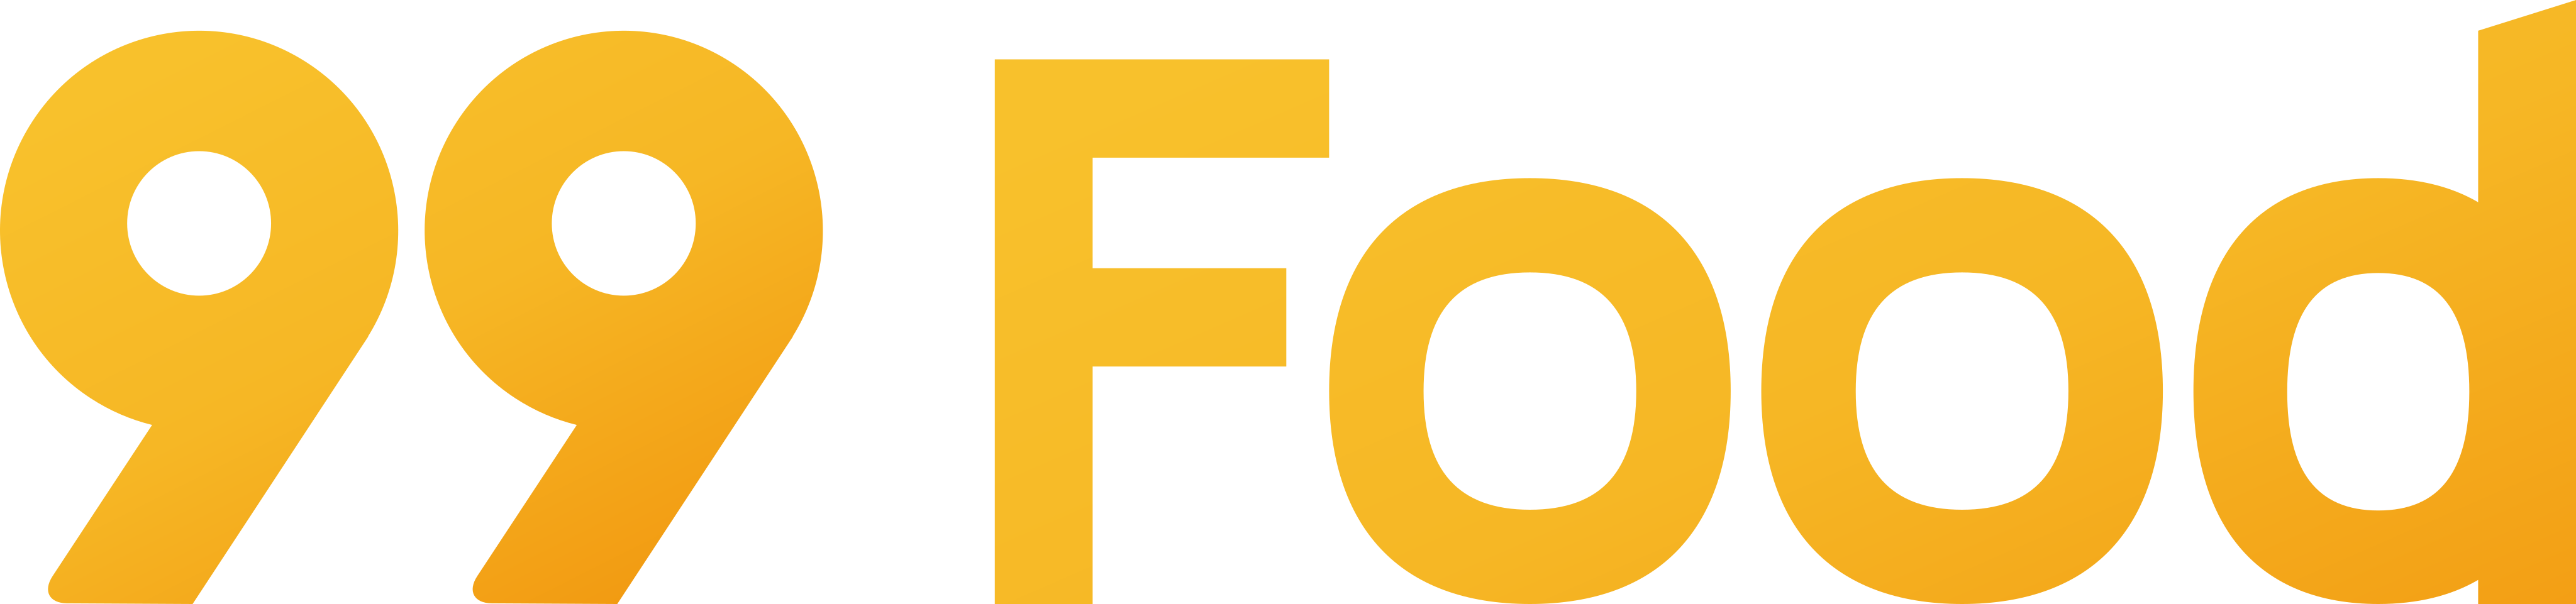 99 Food logo.